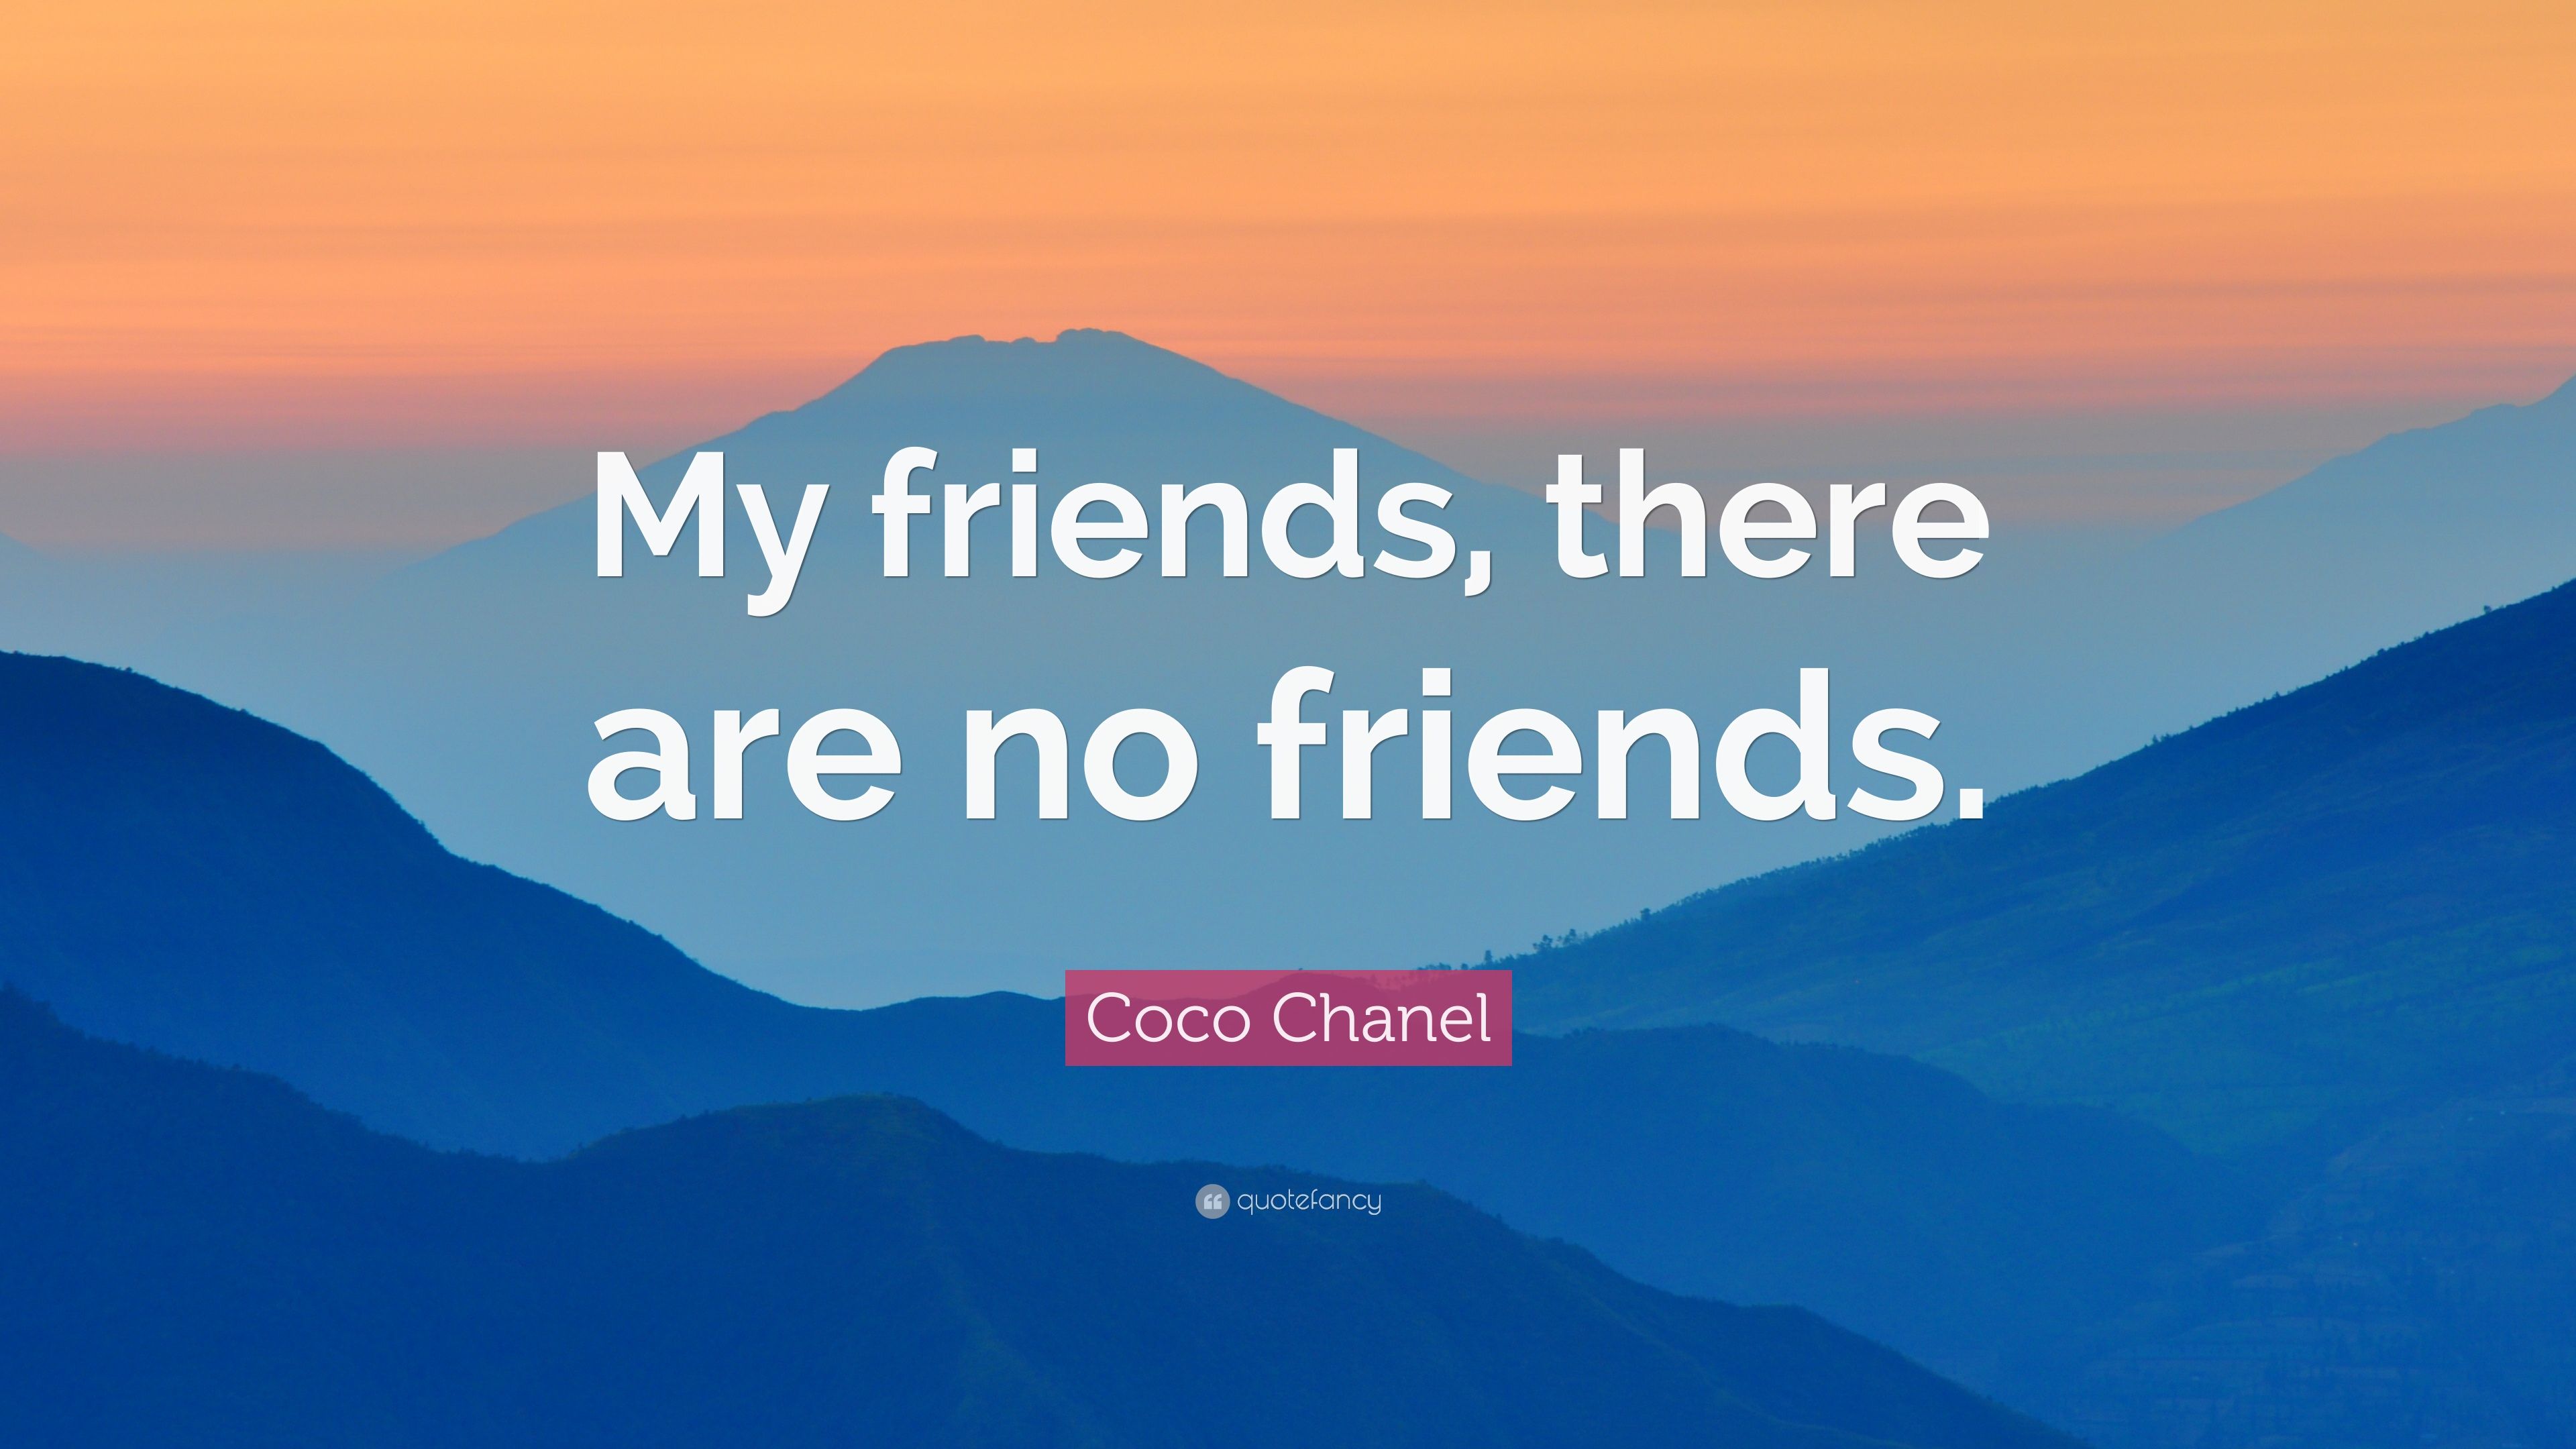 Coco Chanel Quote: “My friends, there are no friends.” (7 wallpaper)